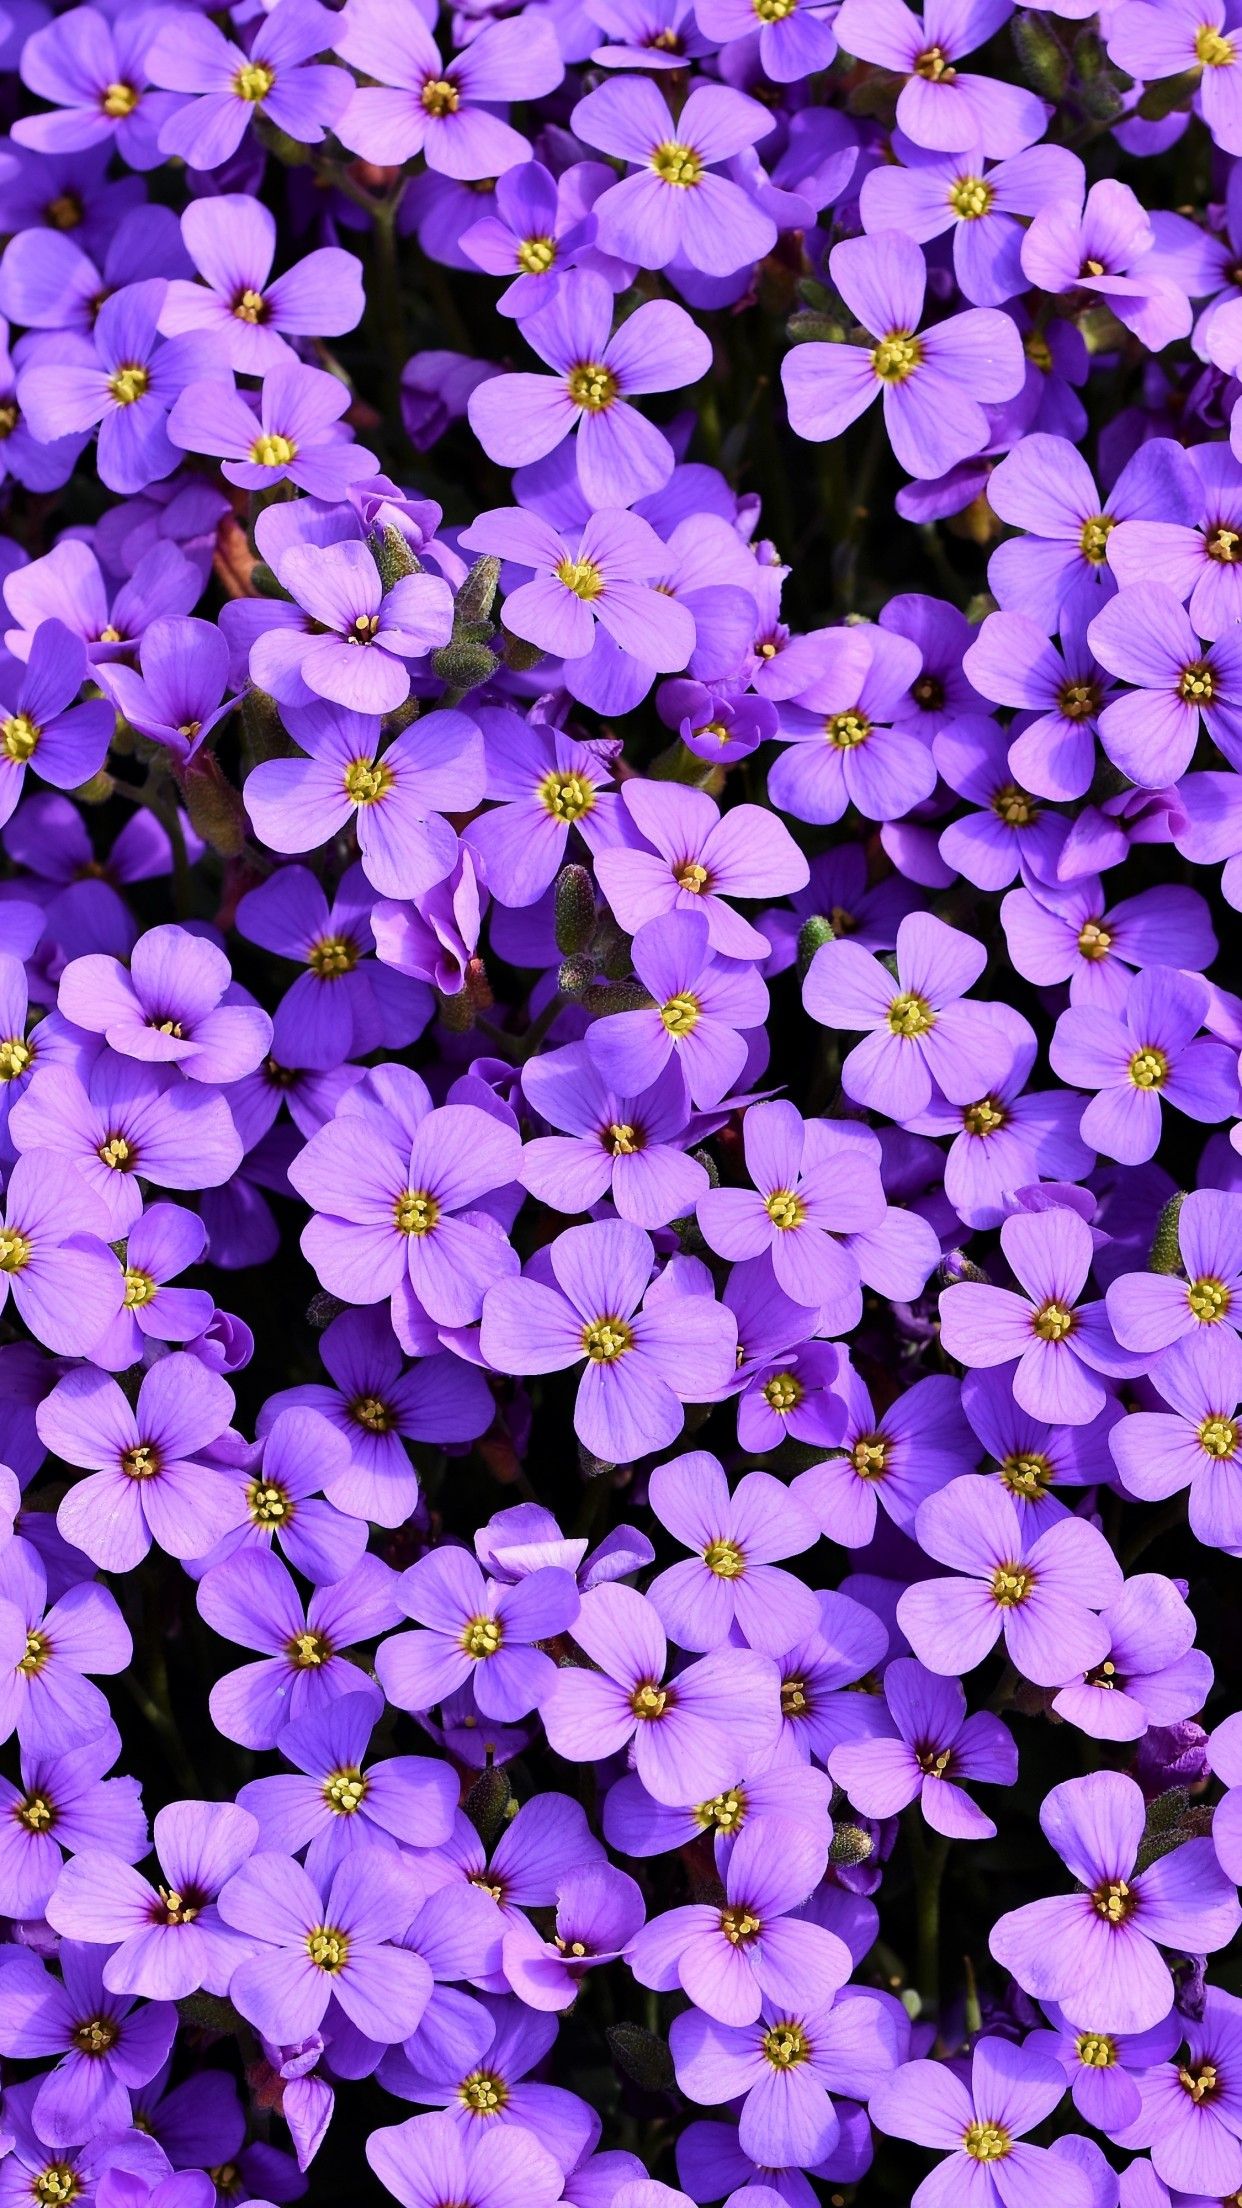 Aubrieta 4K Wallpaper, Violet flowers, Blossom, Spring, Bloom, Purple, Floral Background, Flowers